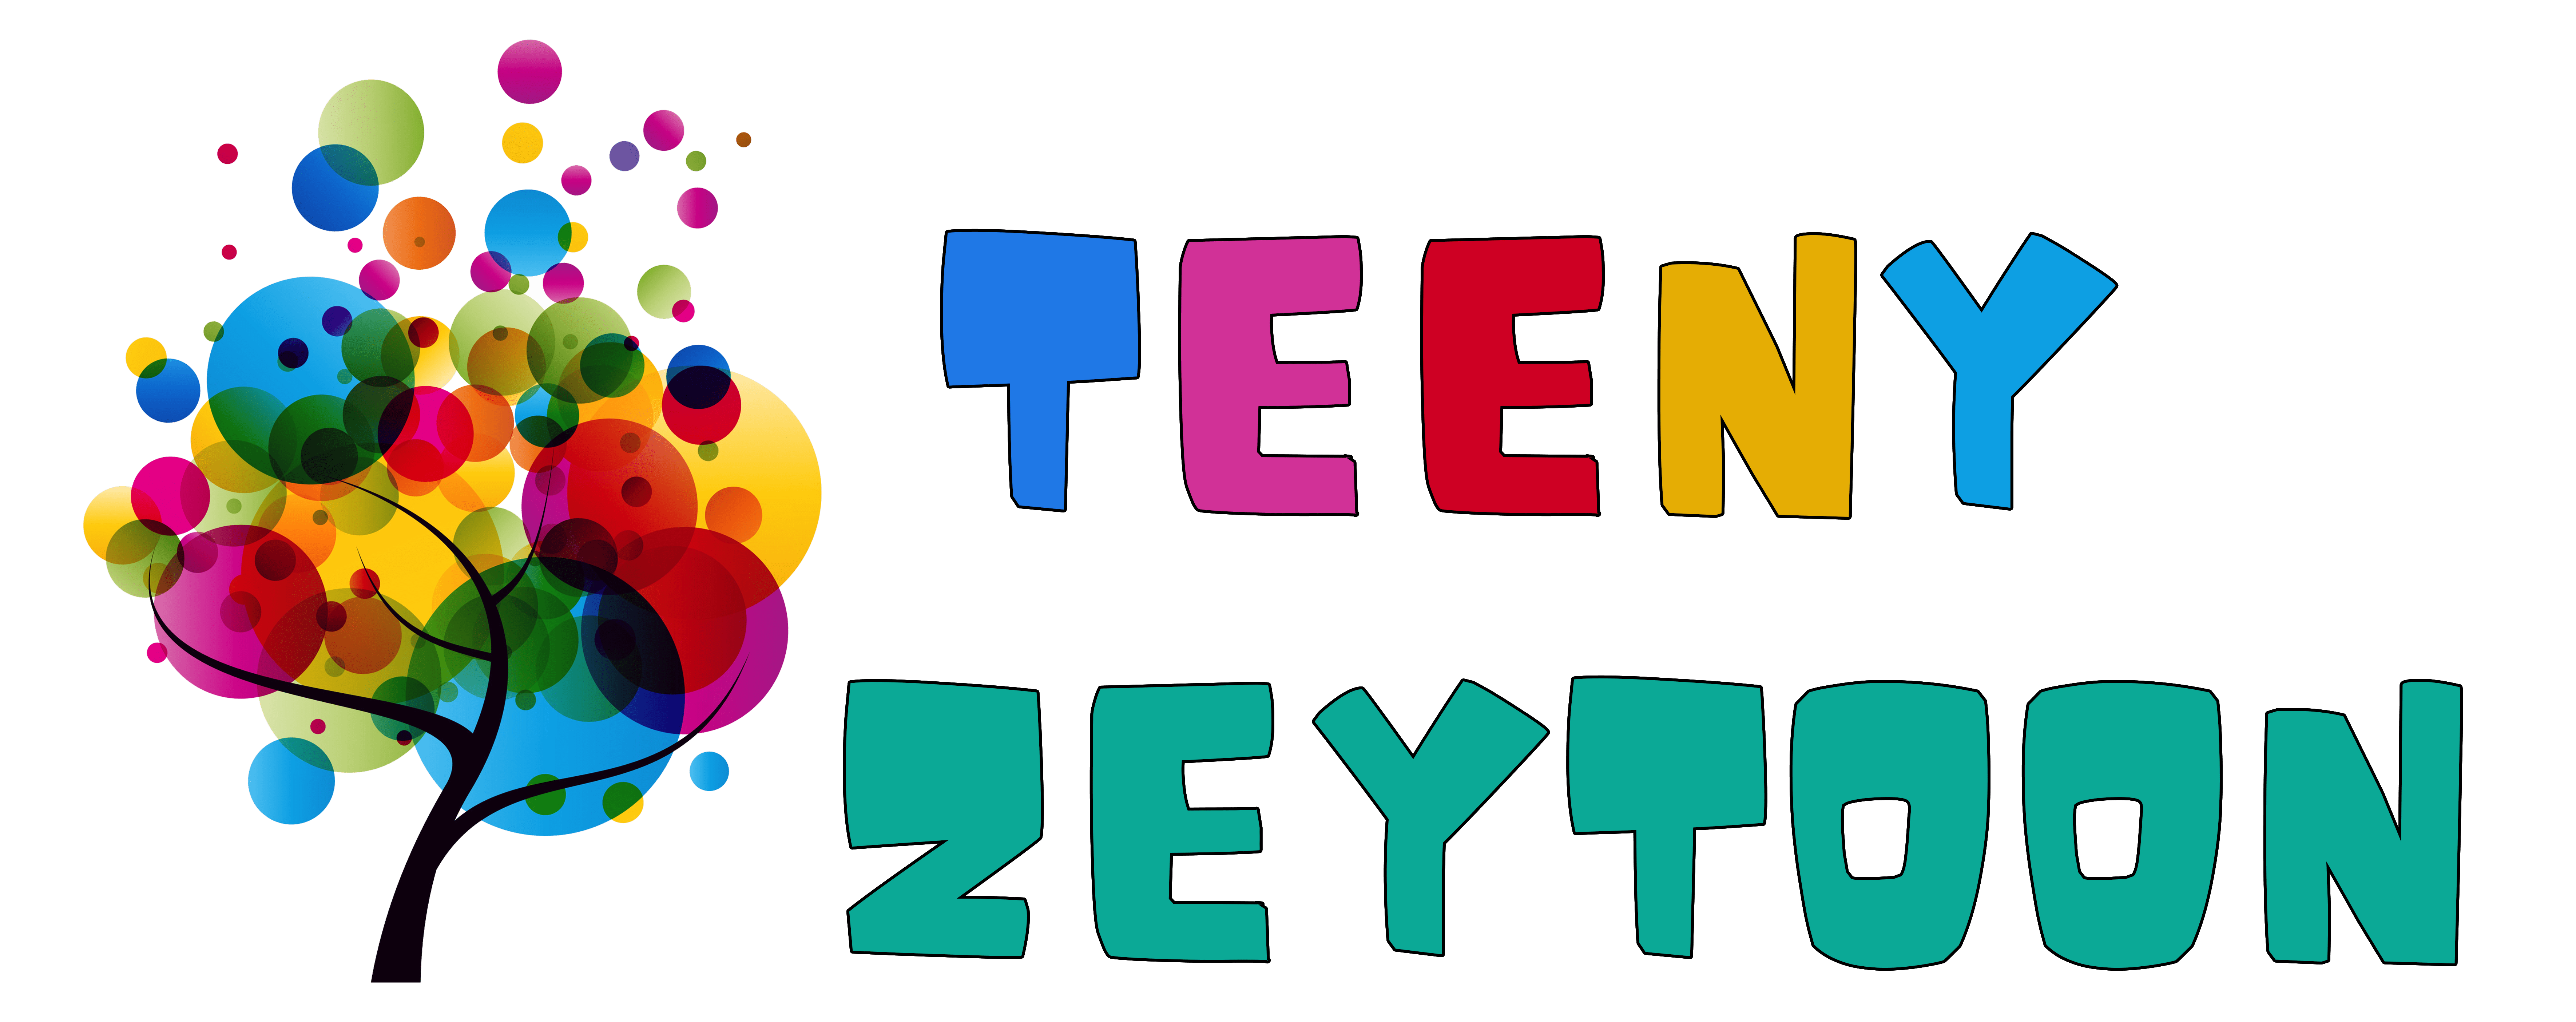 Teeny Zeytoon